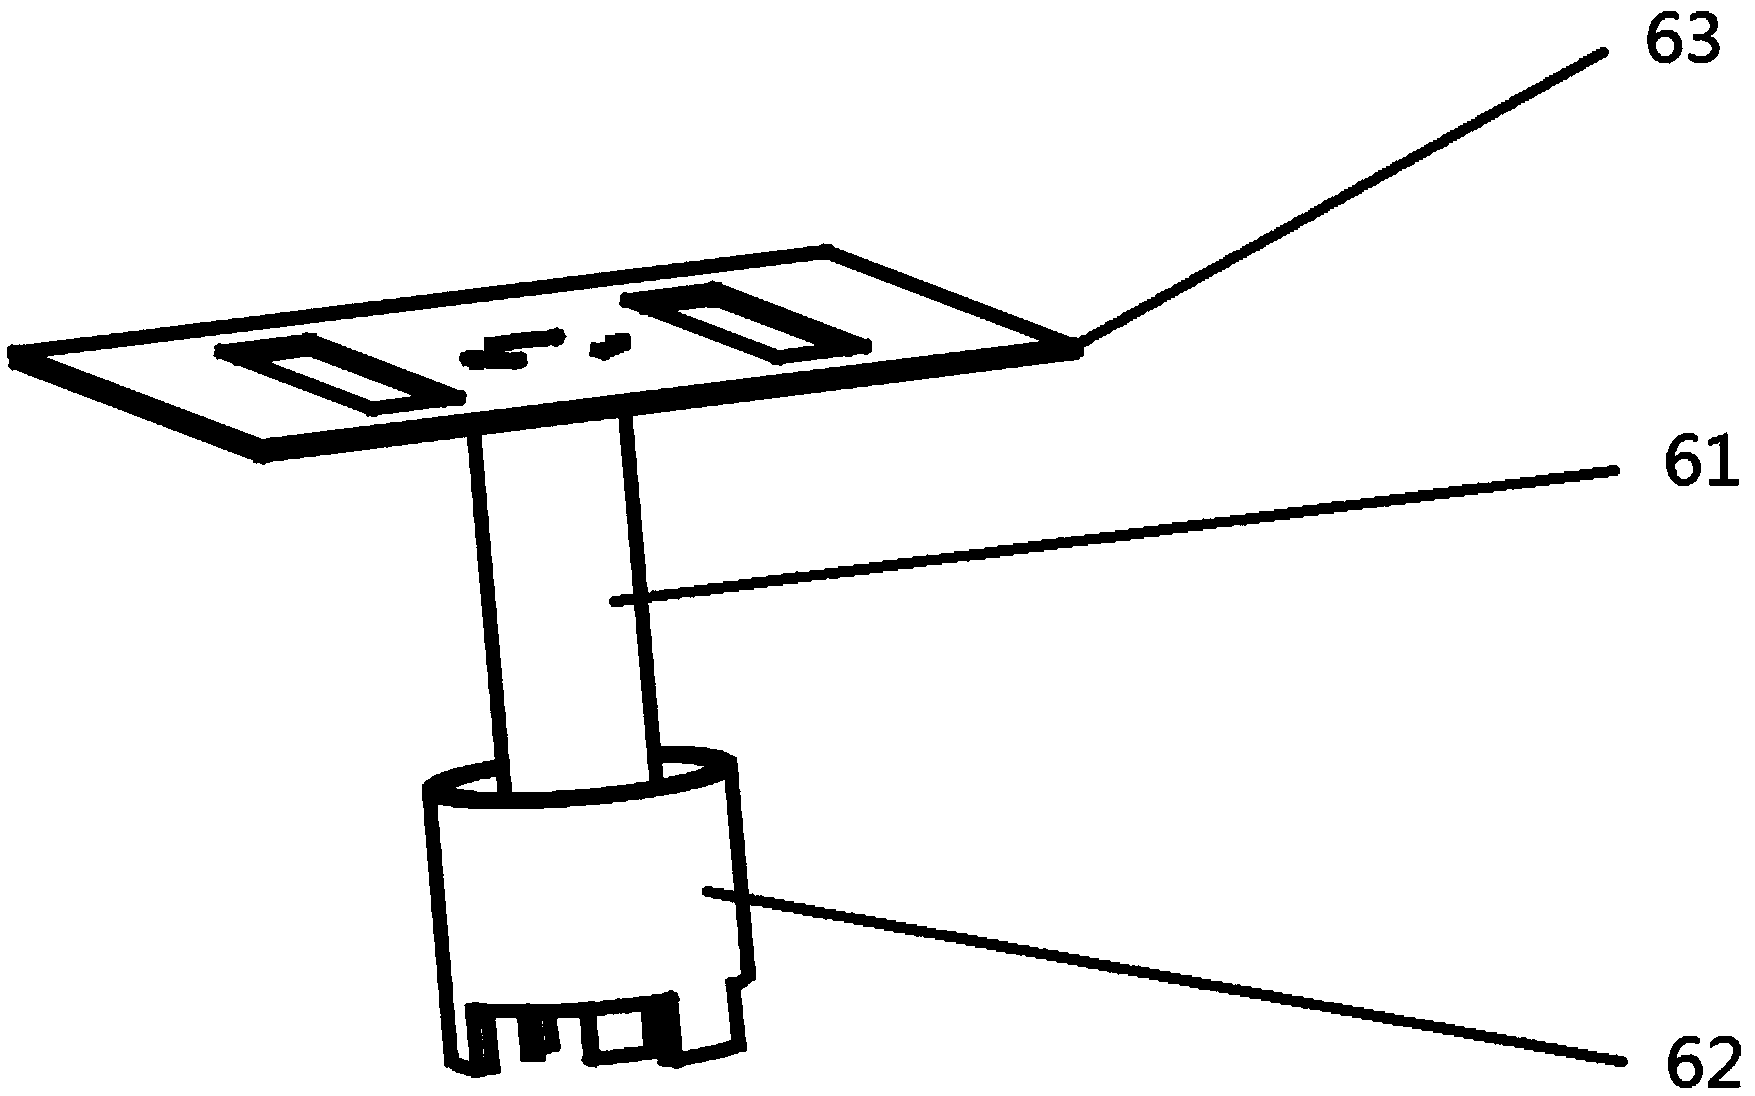 Vehicle mounted antenna